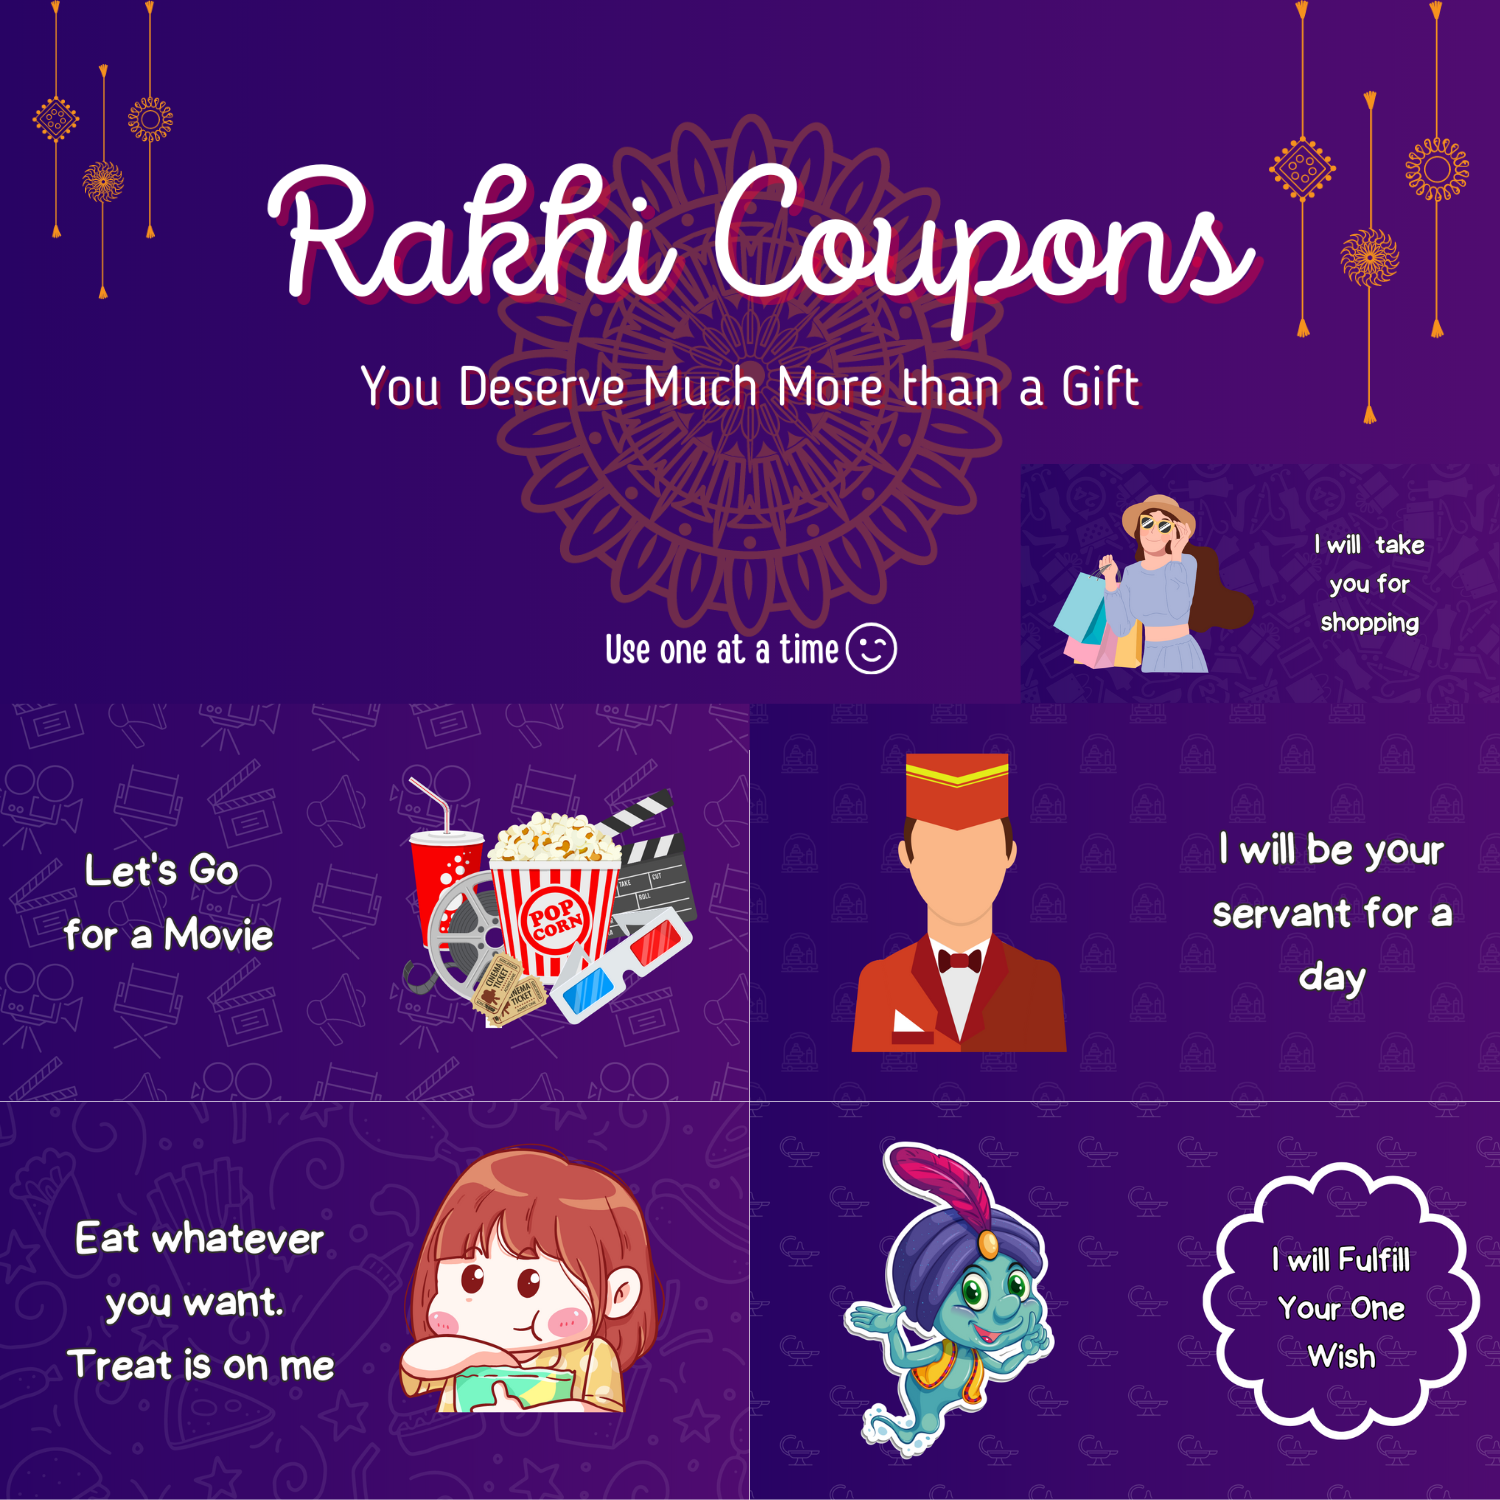 rakhi coupouns product page photo